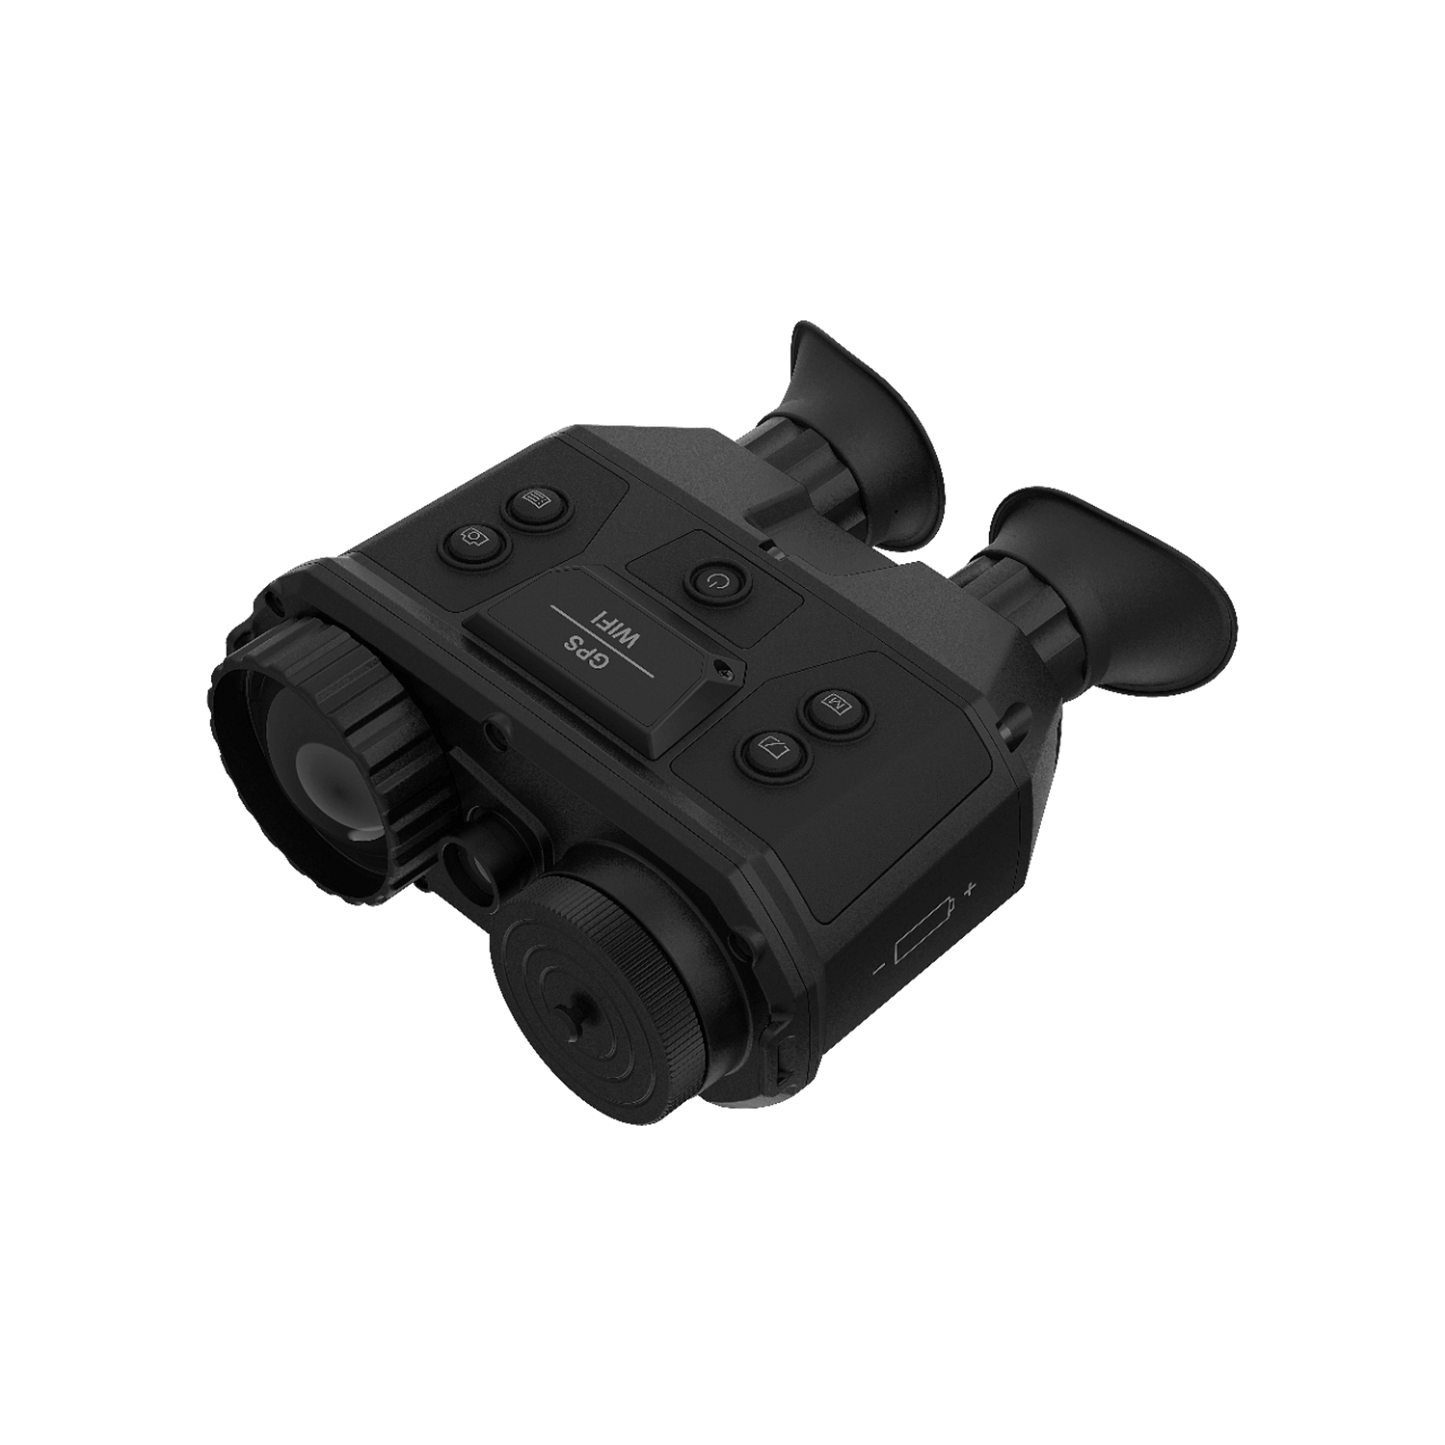 Hikvision Thermal Imaging Binocular - DS-2TS16-50VI/W